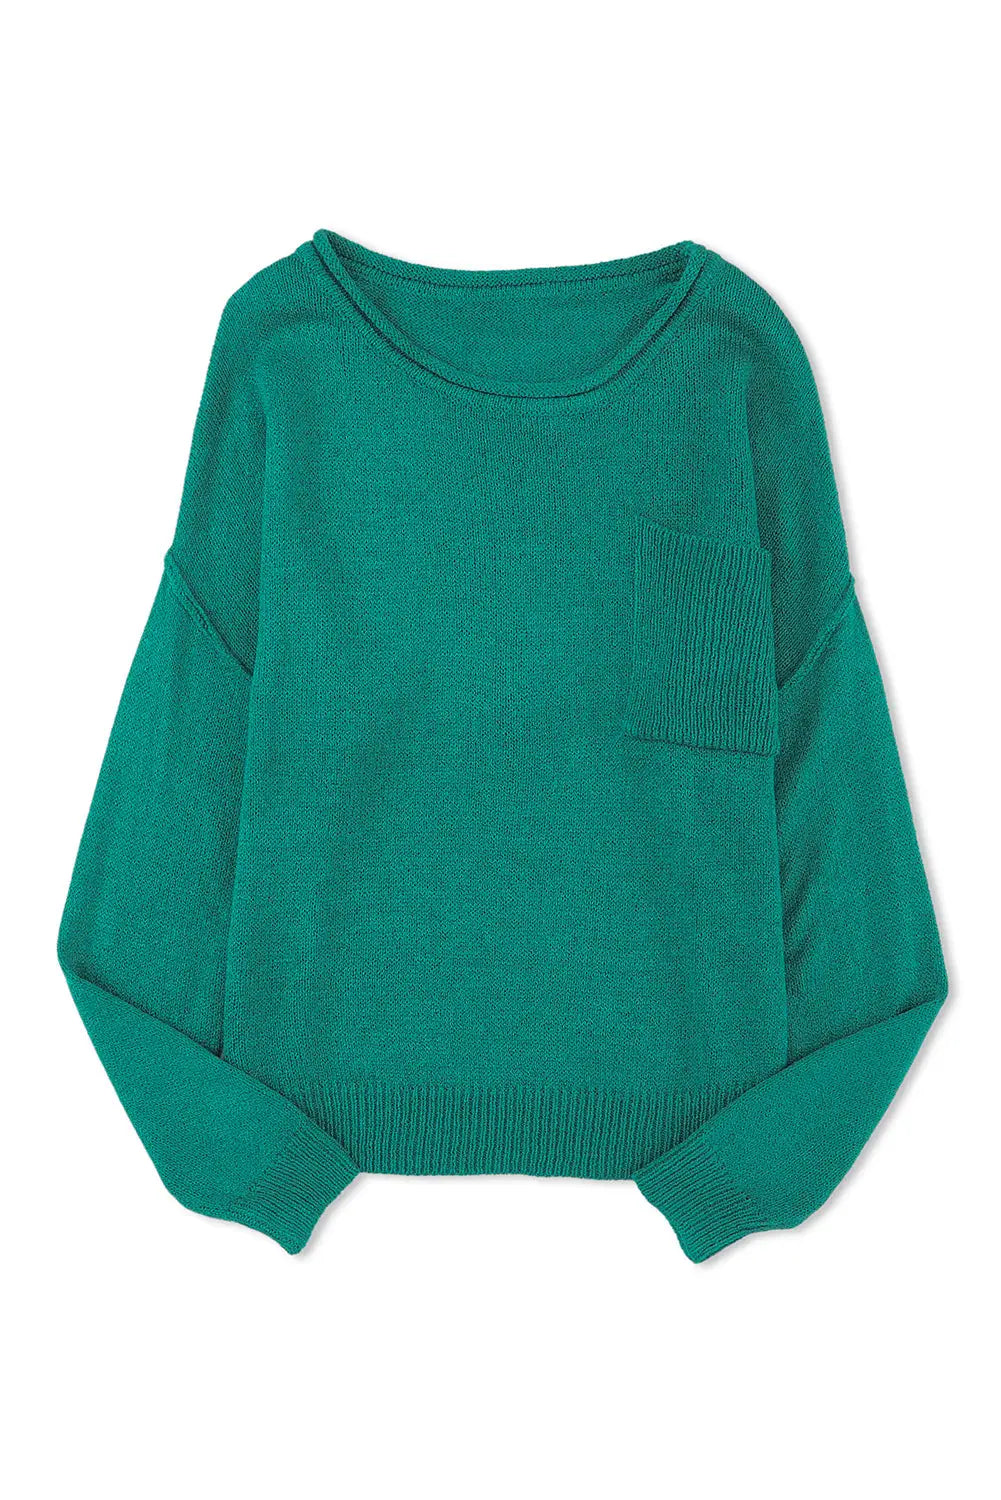 Black solid color off shoulder rib knit sweater with pocket - & cardigans